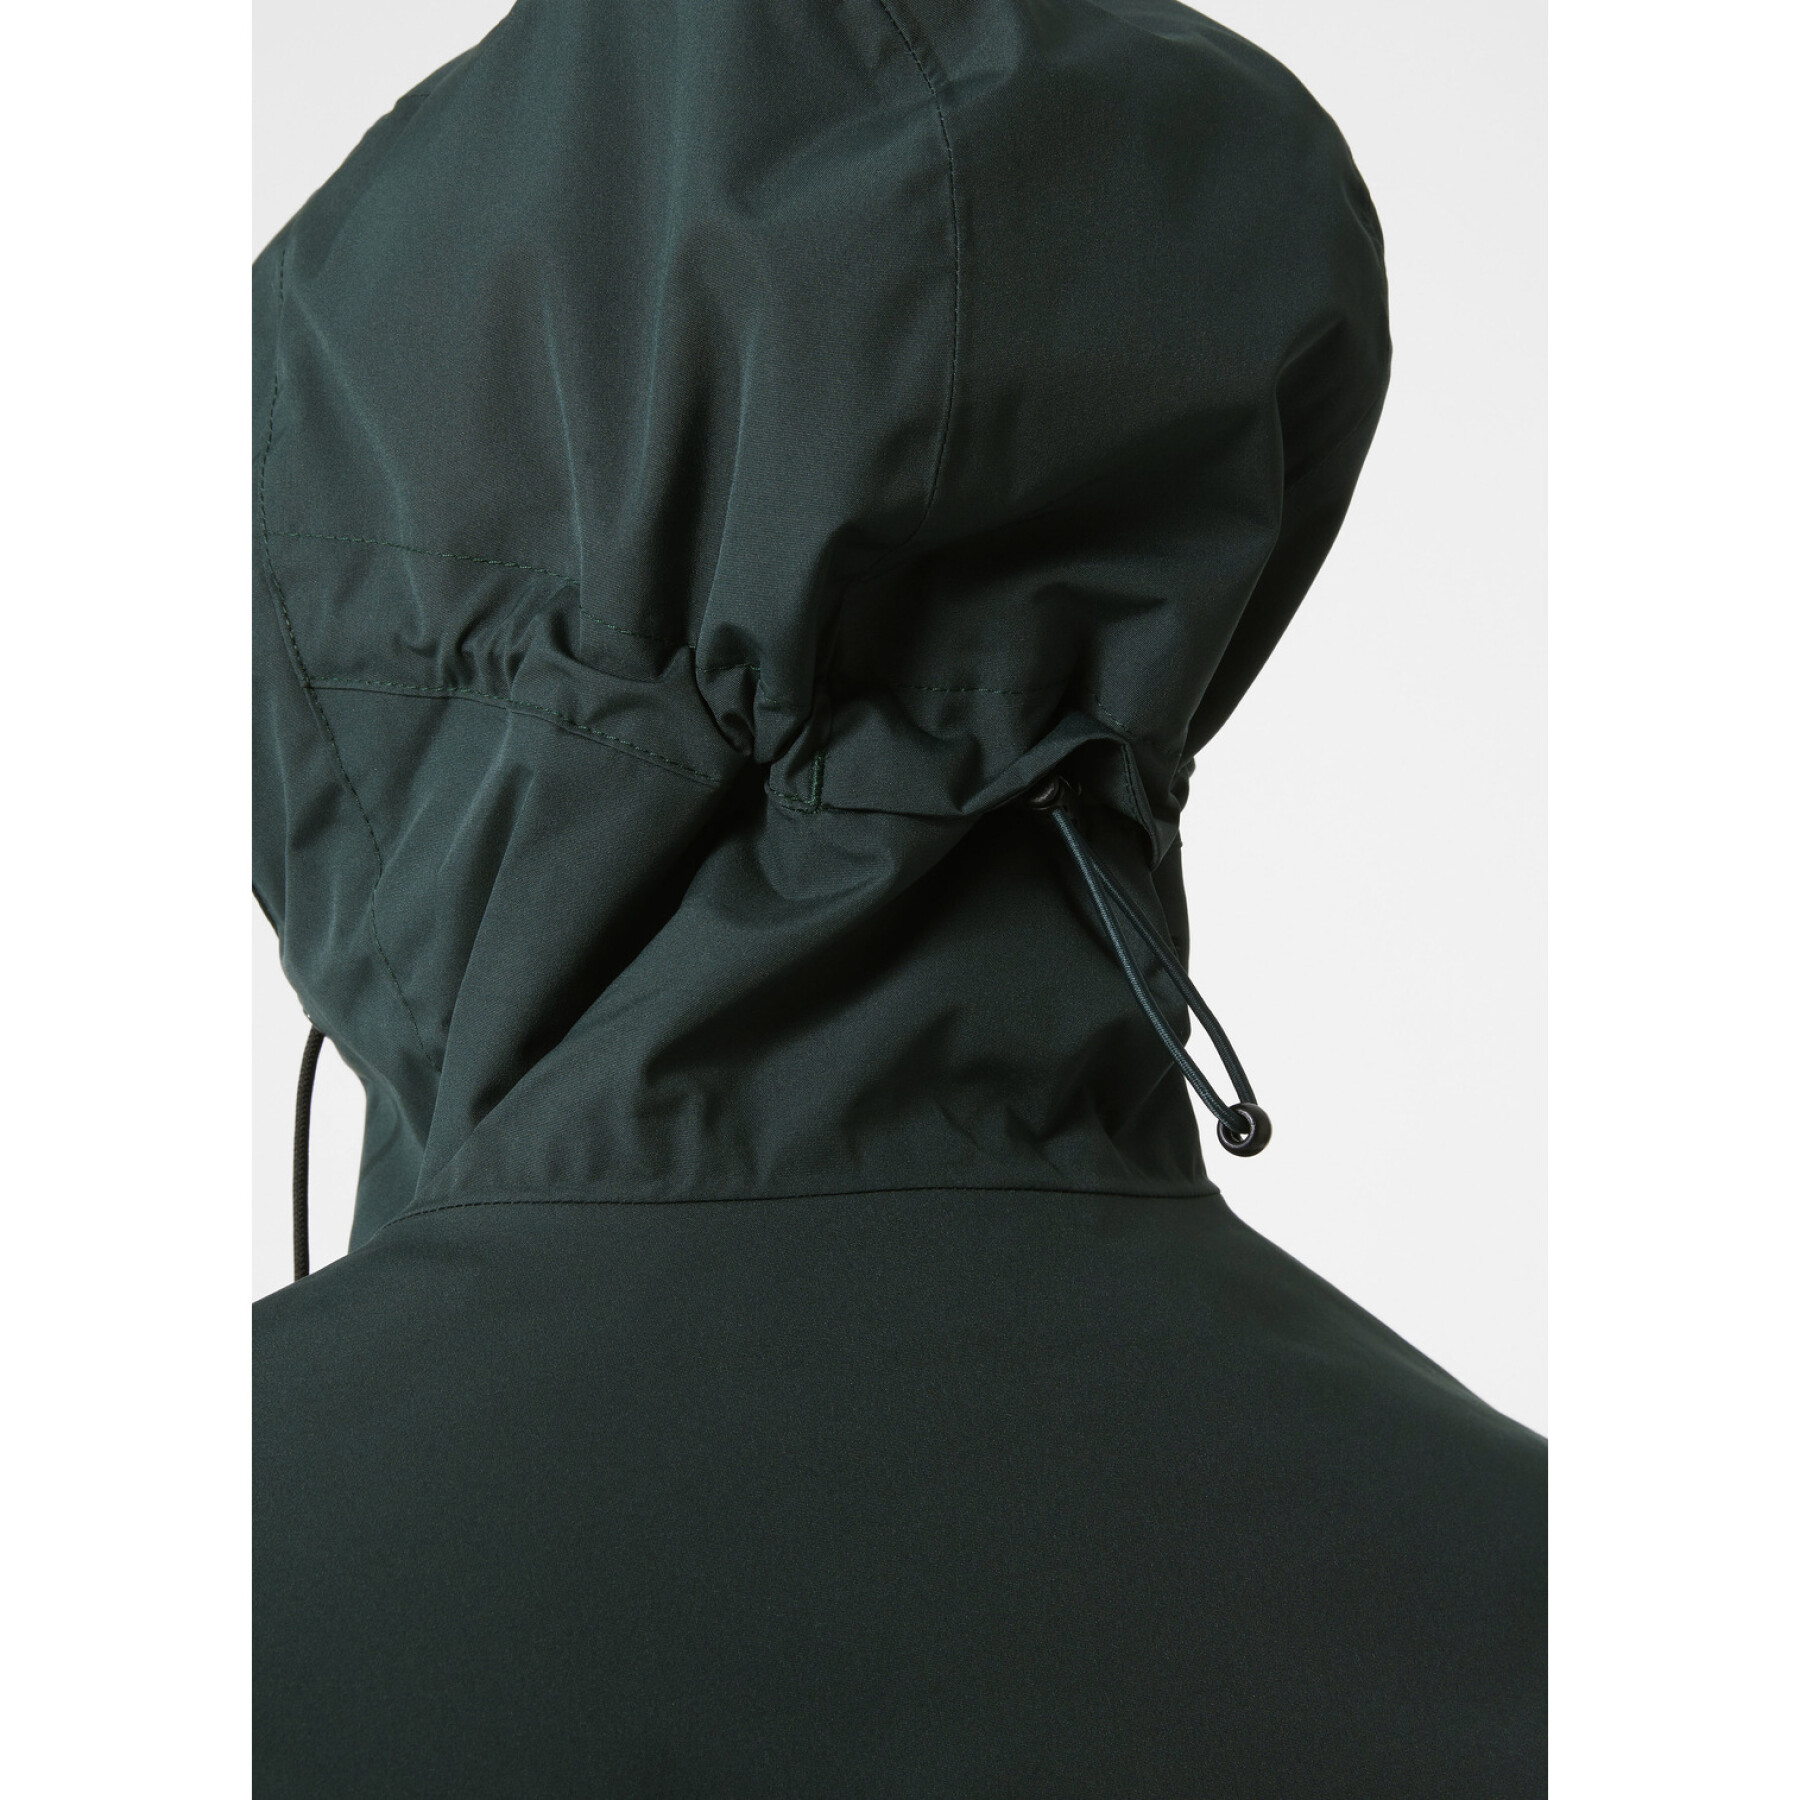 Women's waterproof jacket Helly Hansen Aspire